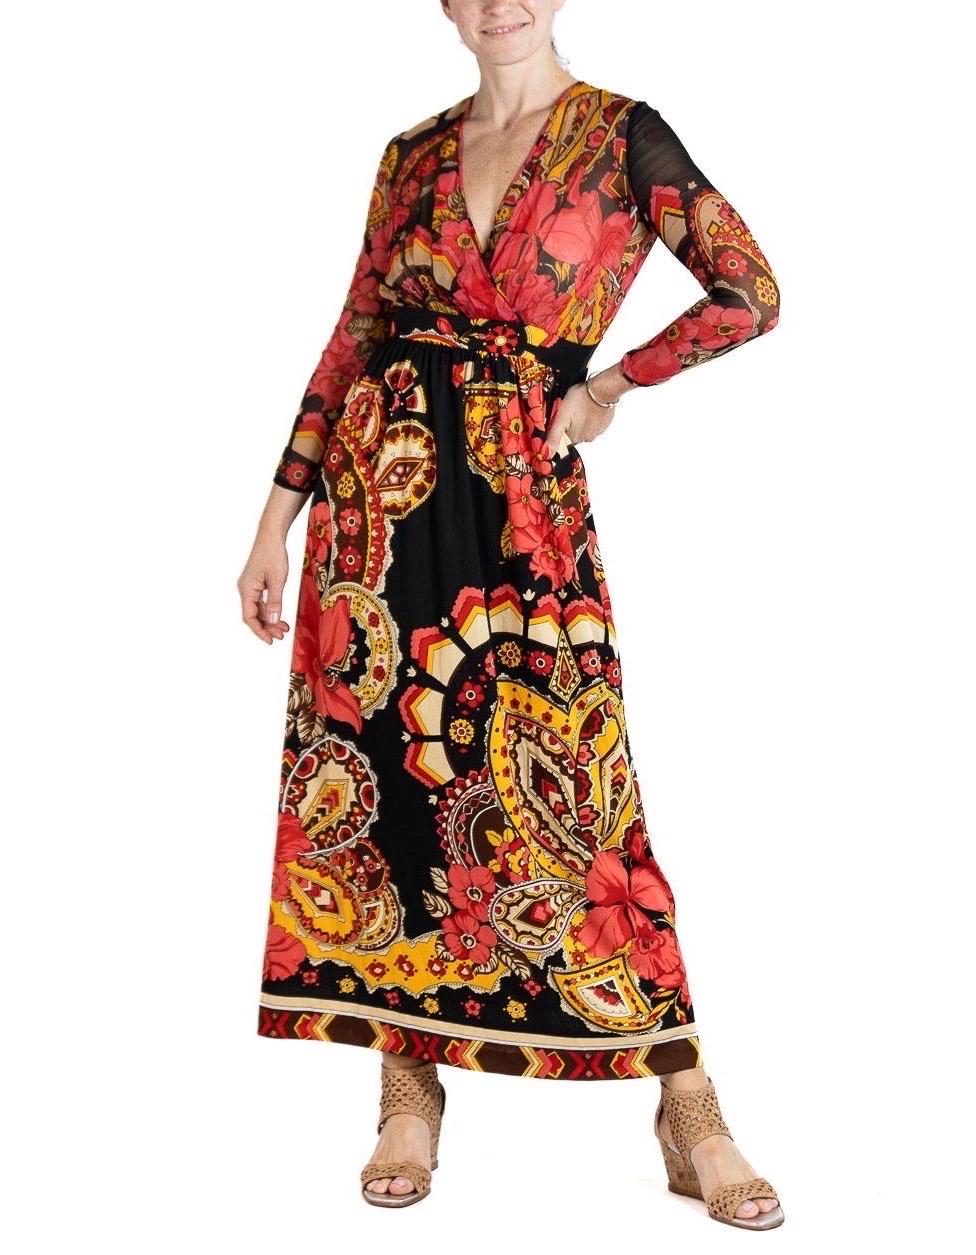 MORPHEW COLLECTION Rainbow Silk Taffeta Plaid Denise Dress For Sale 4